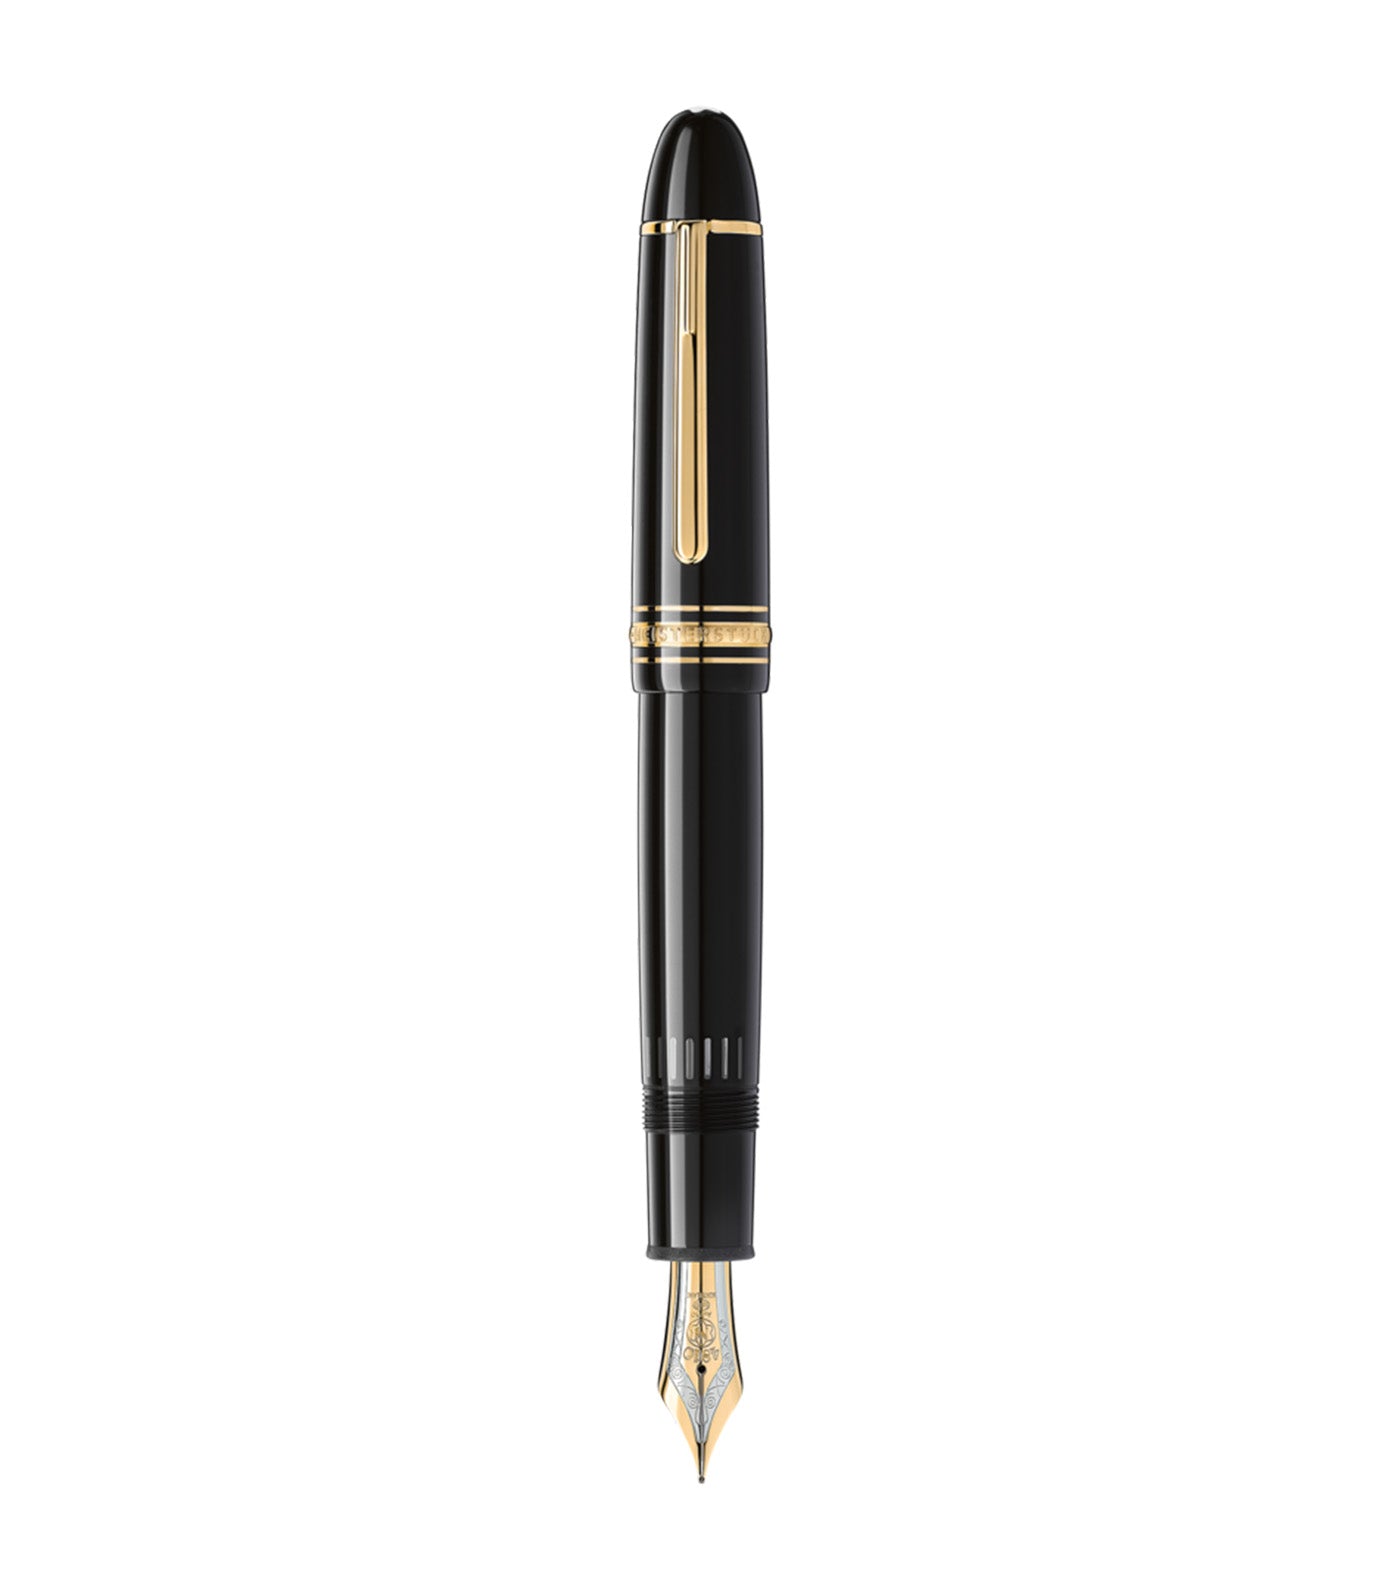 Meisterstück Gold-Coated 149 Fountain Pen (F) Black